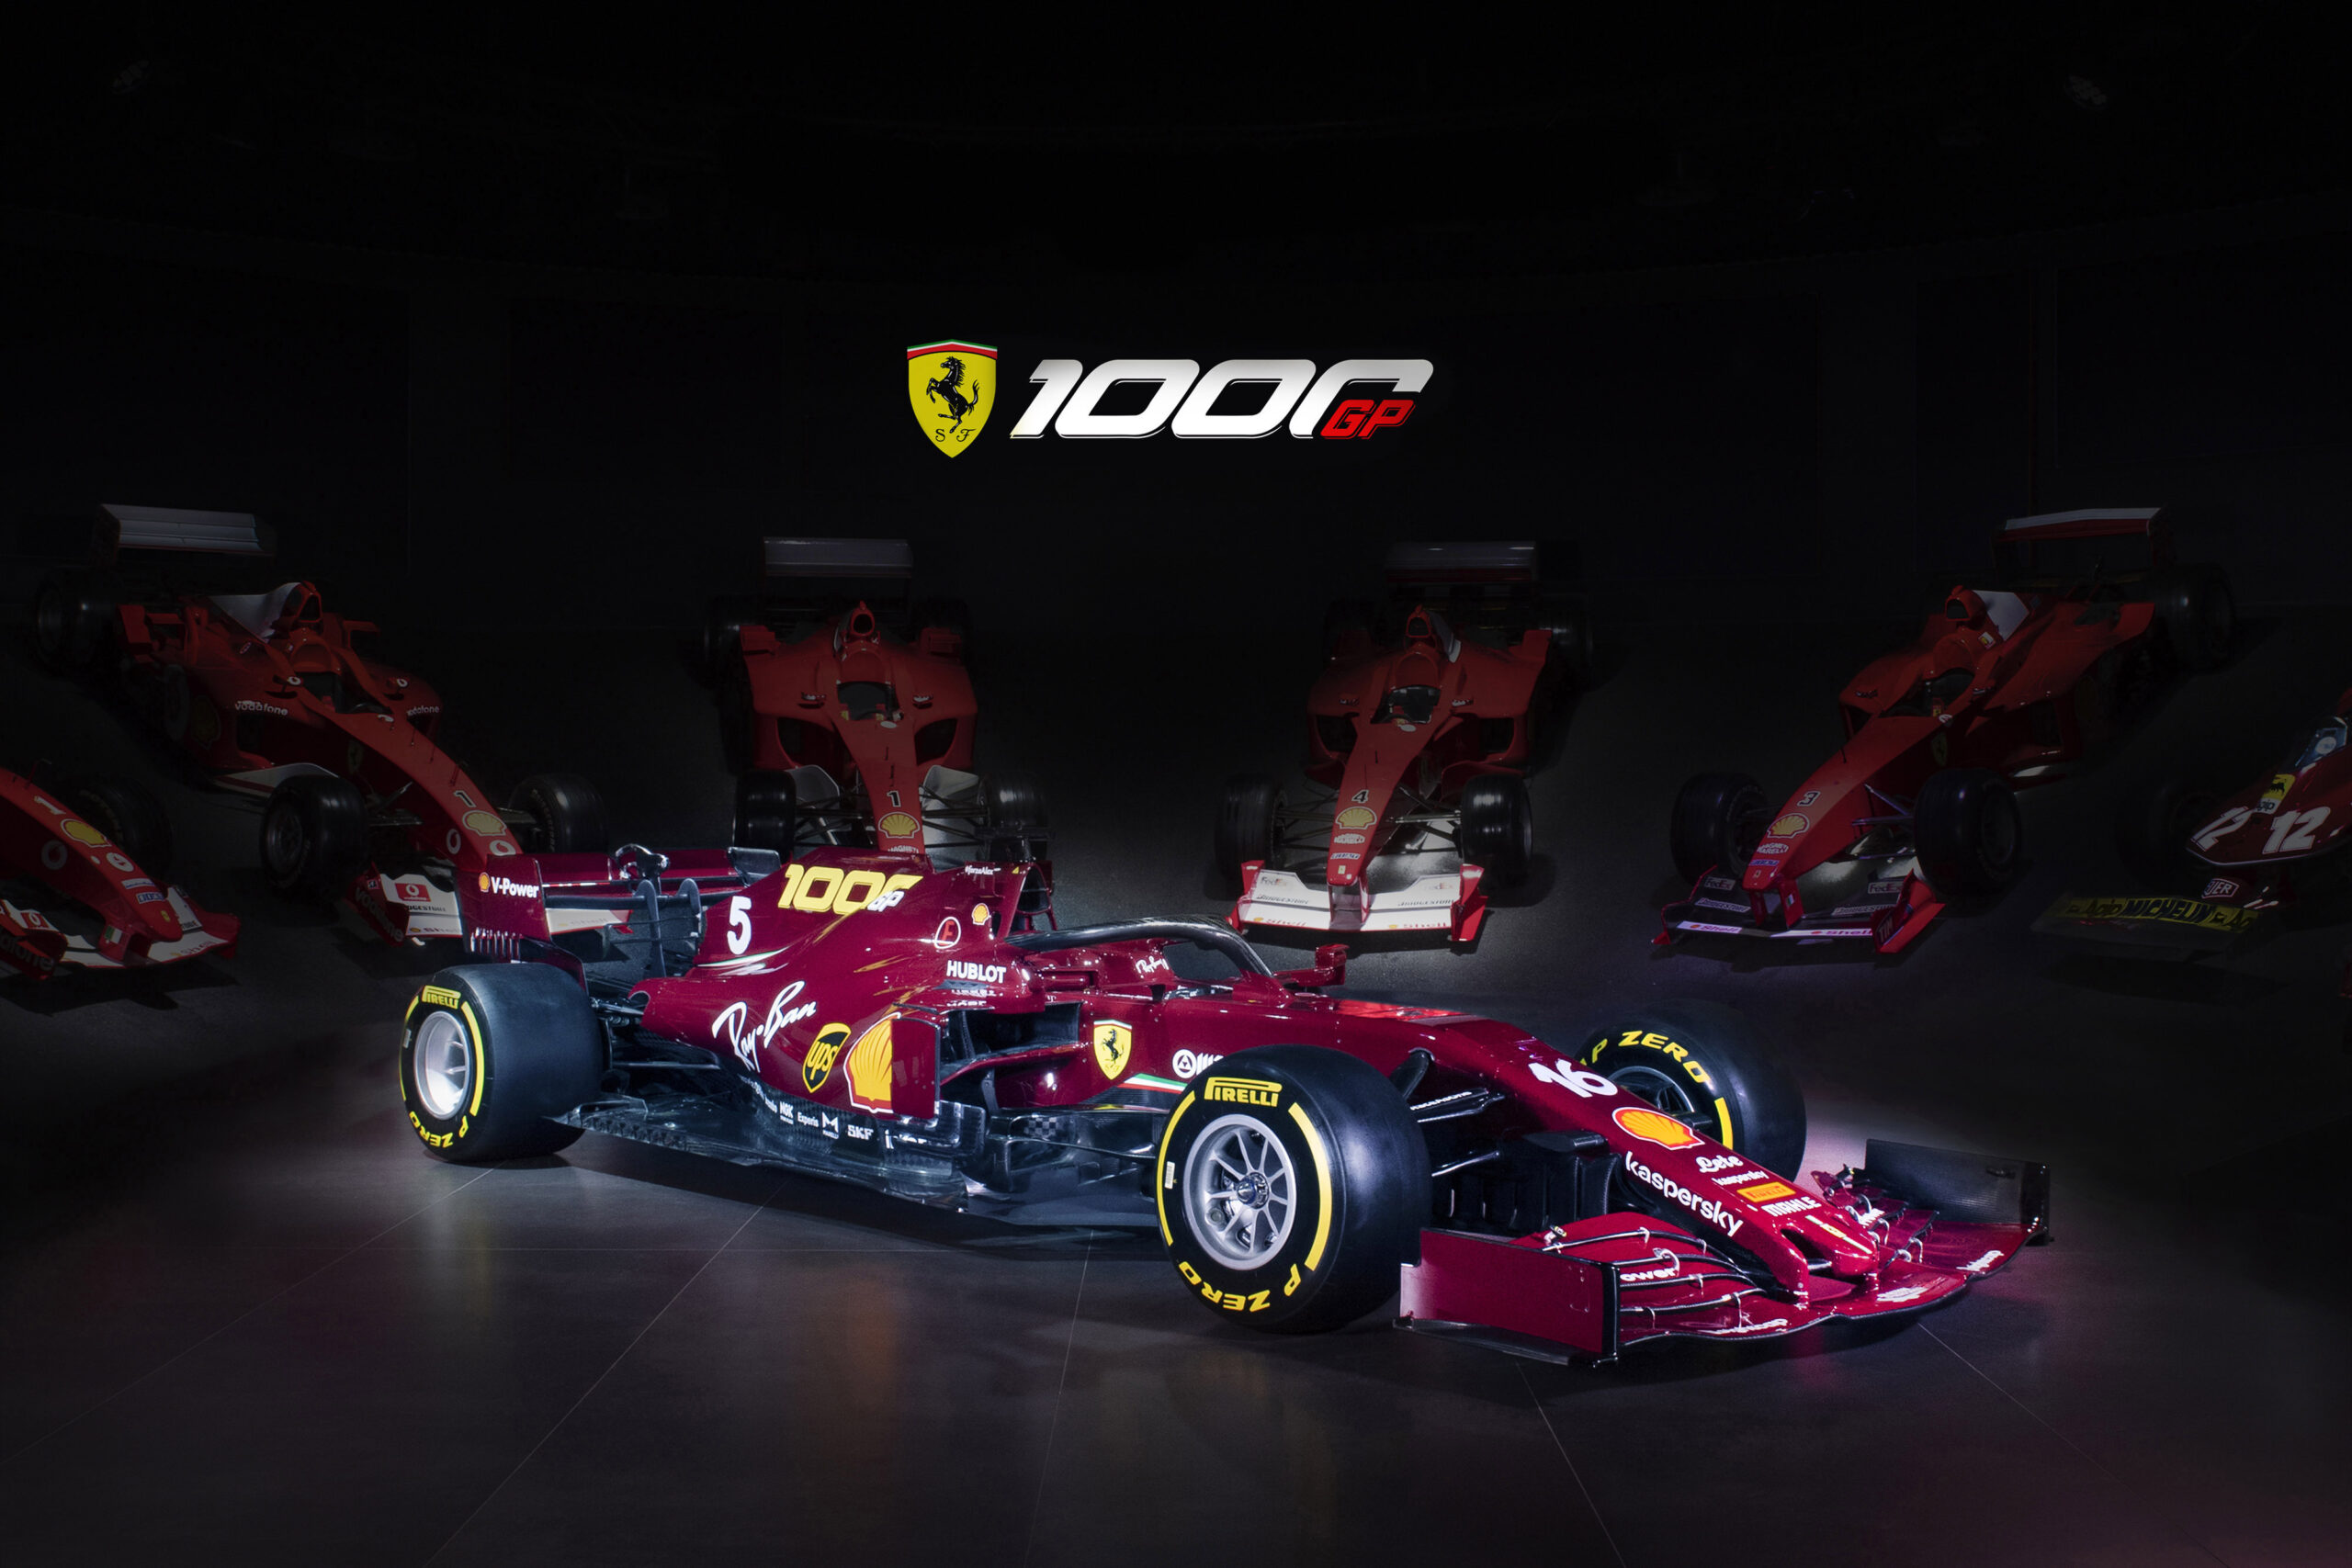 f1 special edition livery: Ferrari